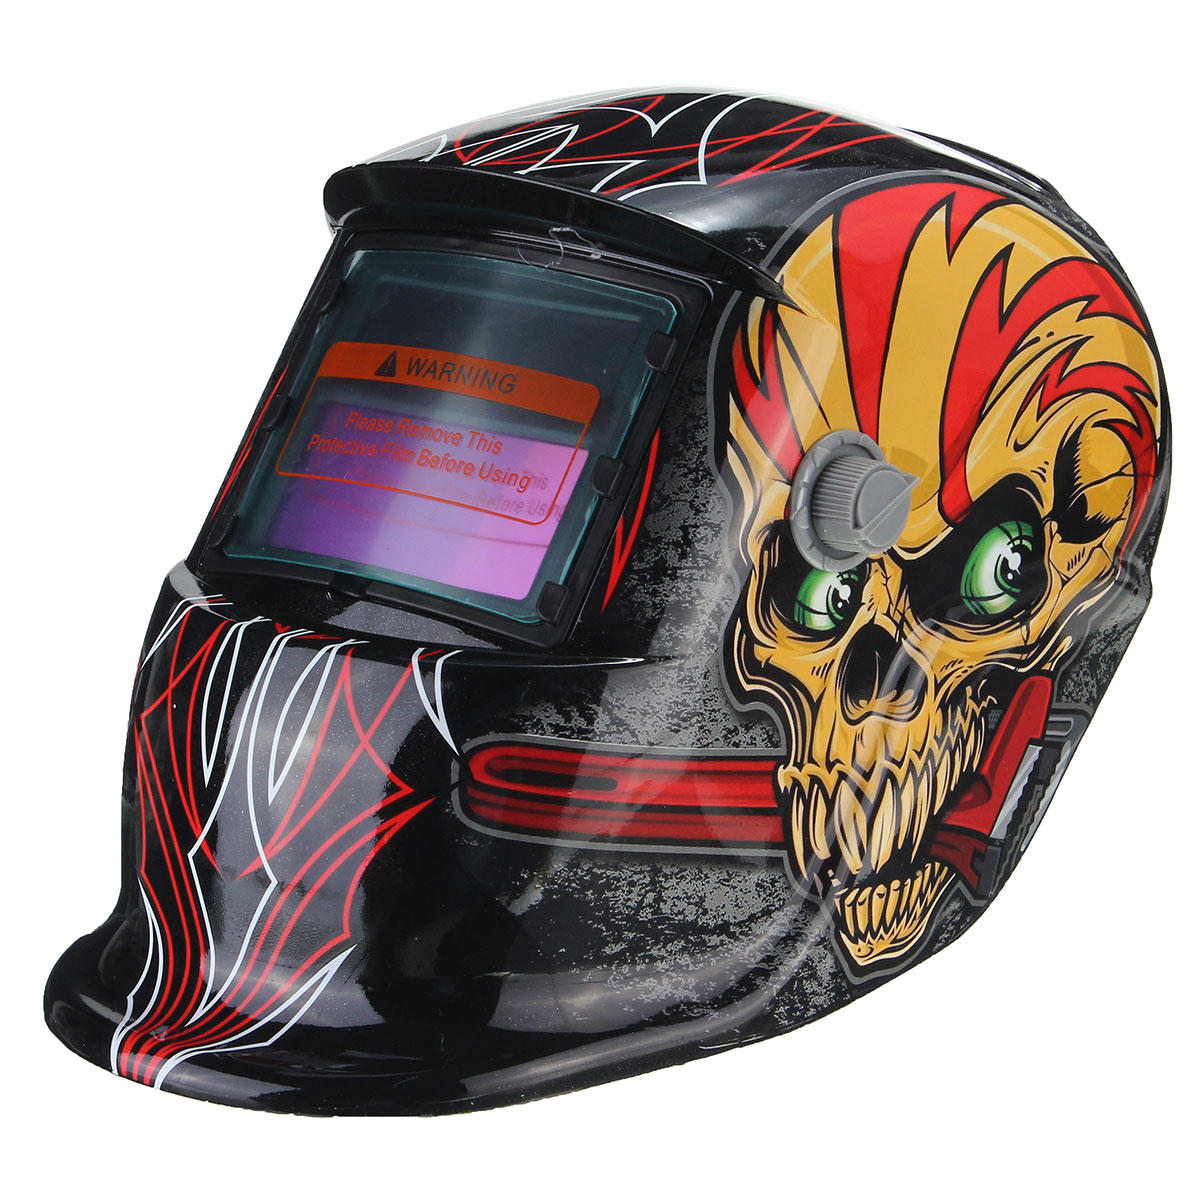 Skull Pattern Auto Darkening ARC MIG TIG Welding Helmet Welder Mask Protector